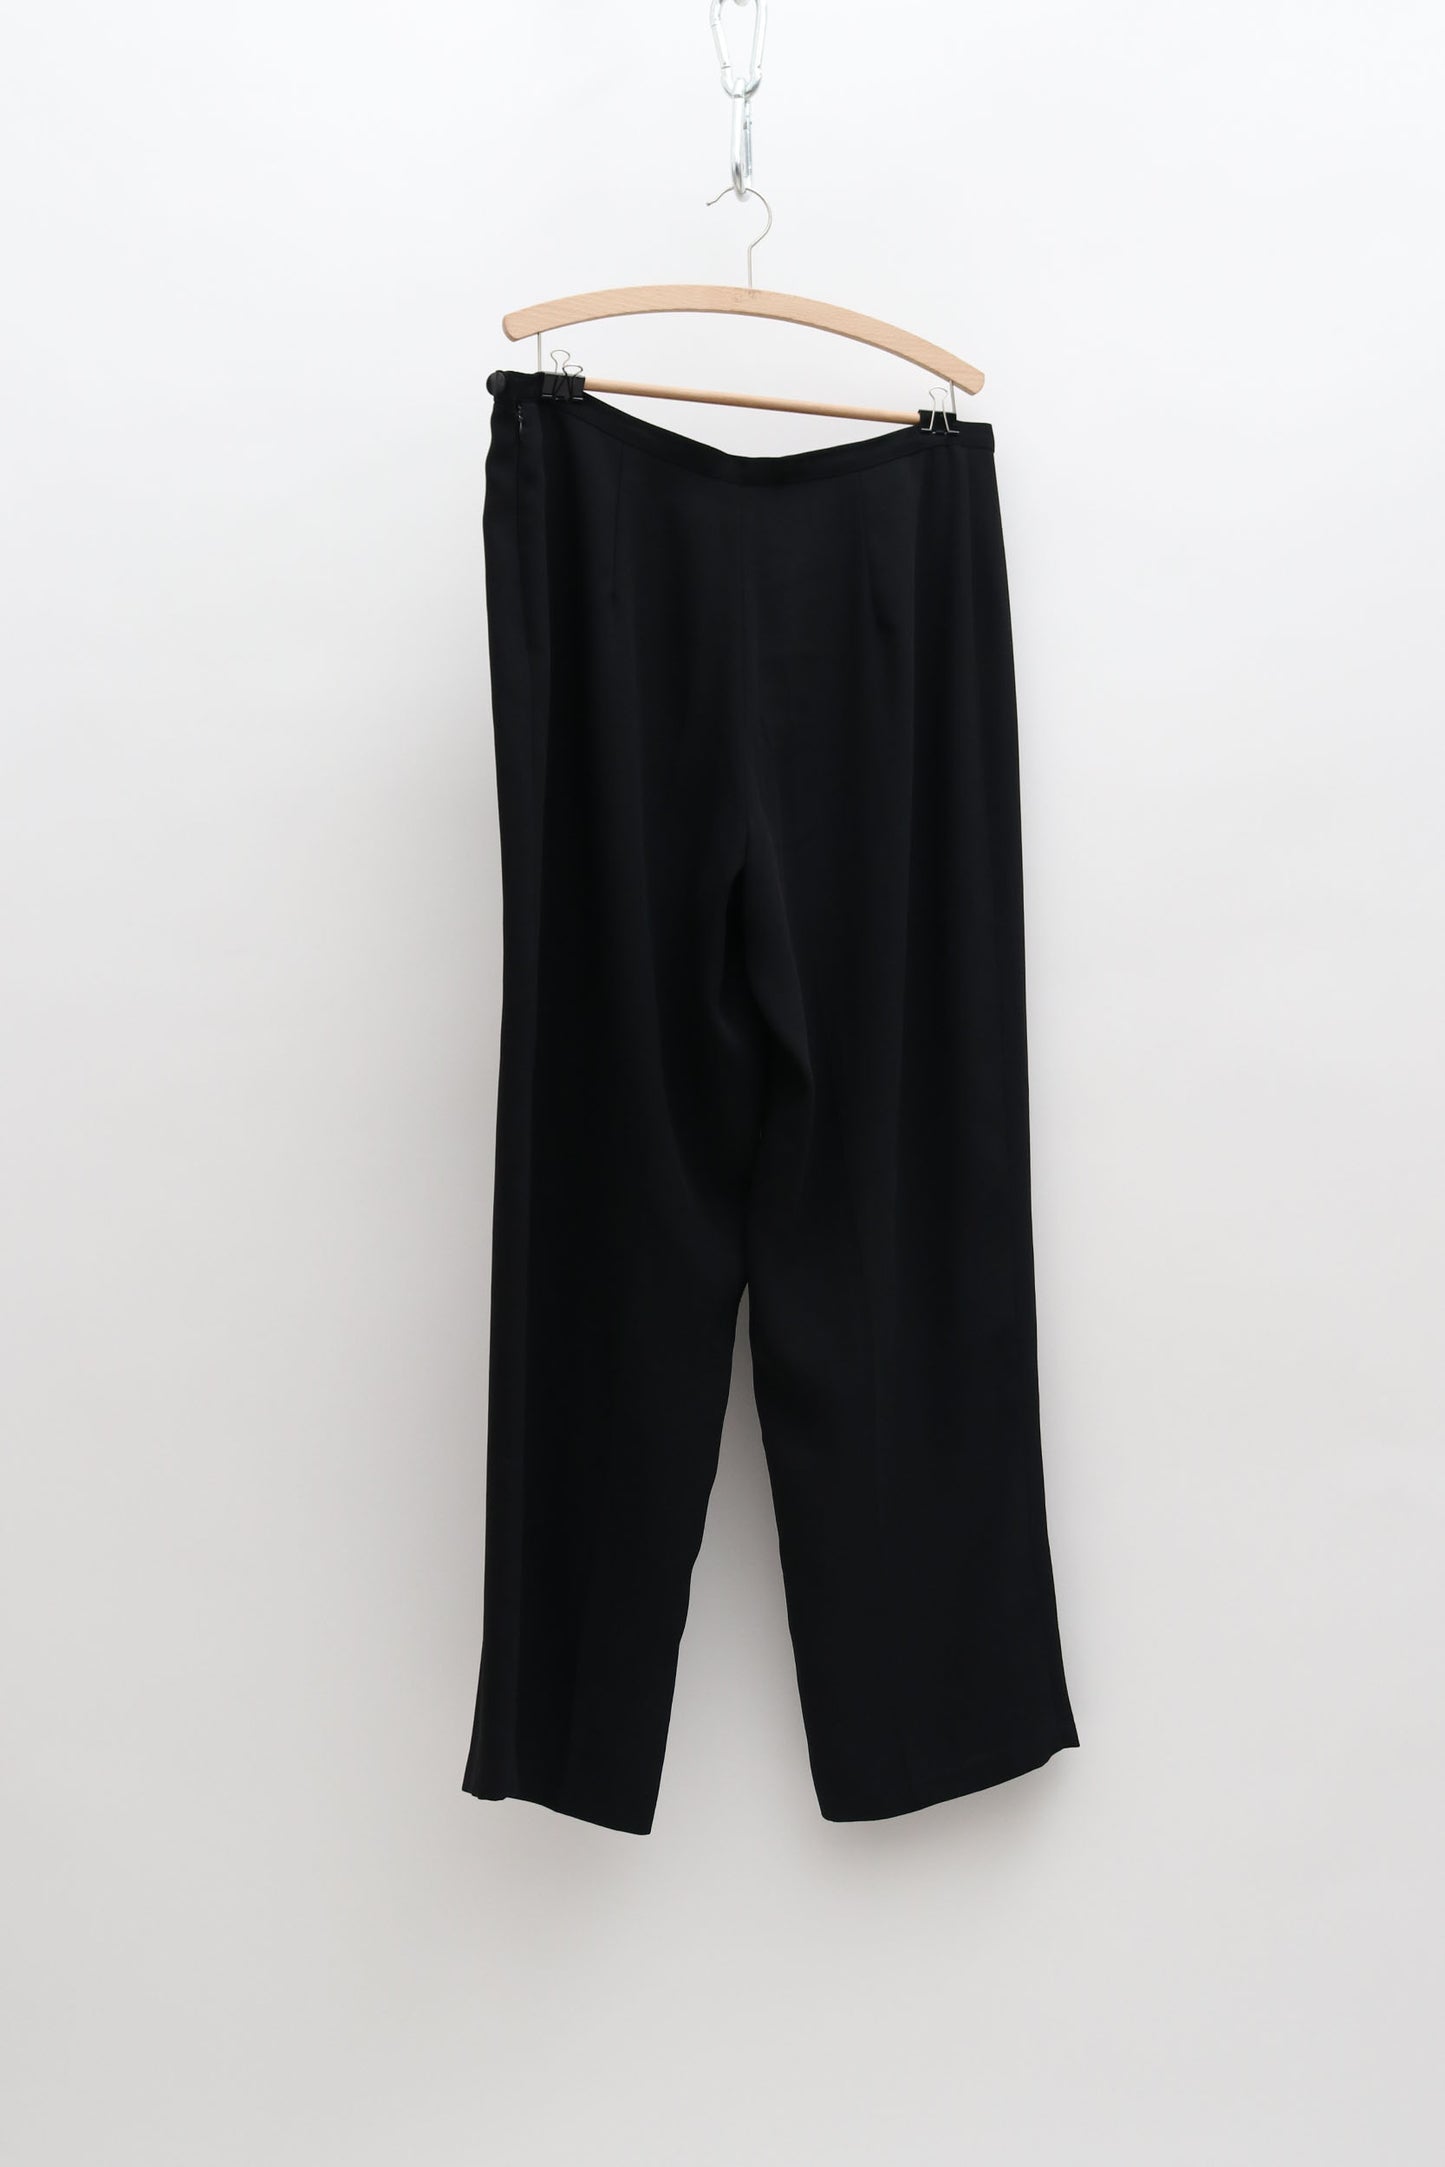 Vintage Black Crepe Trouser